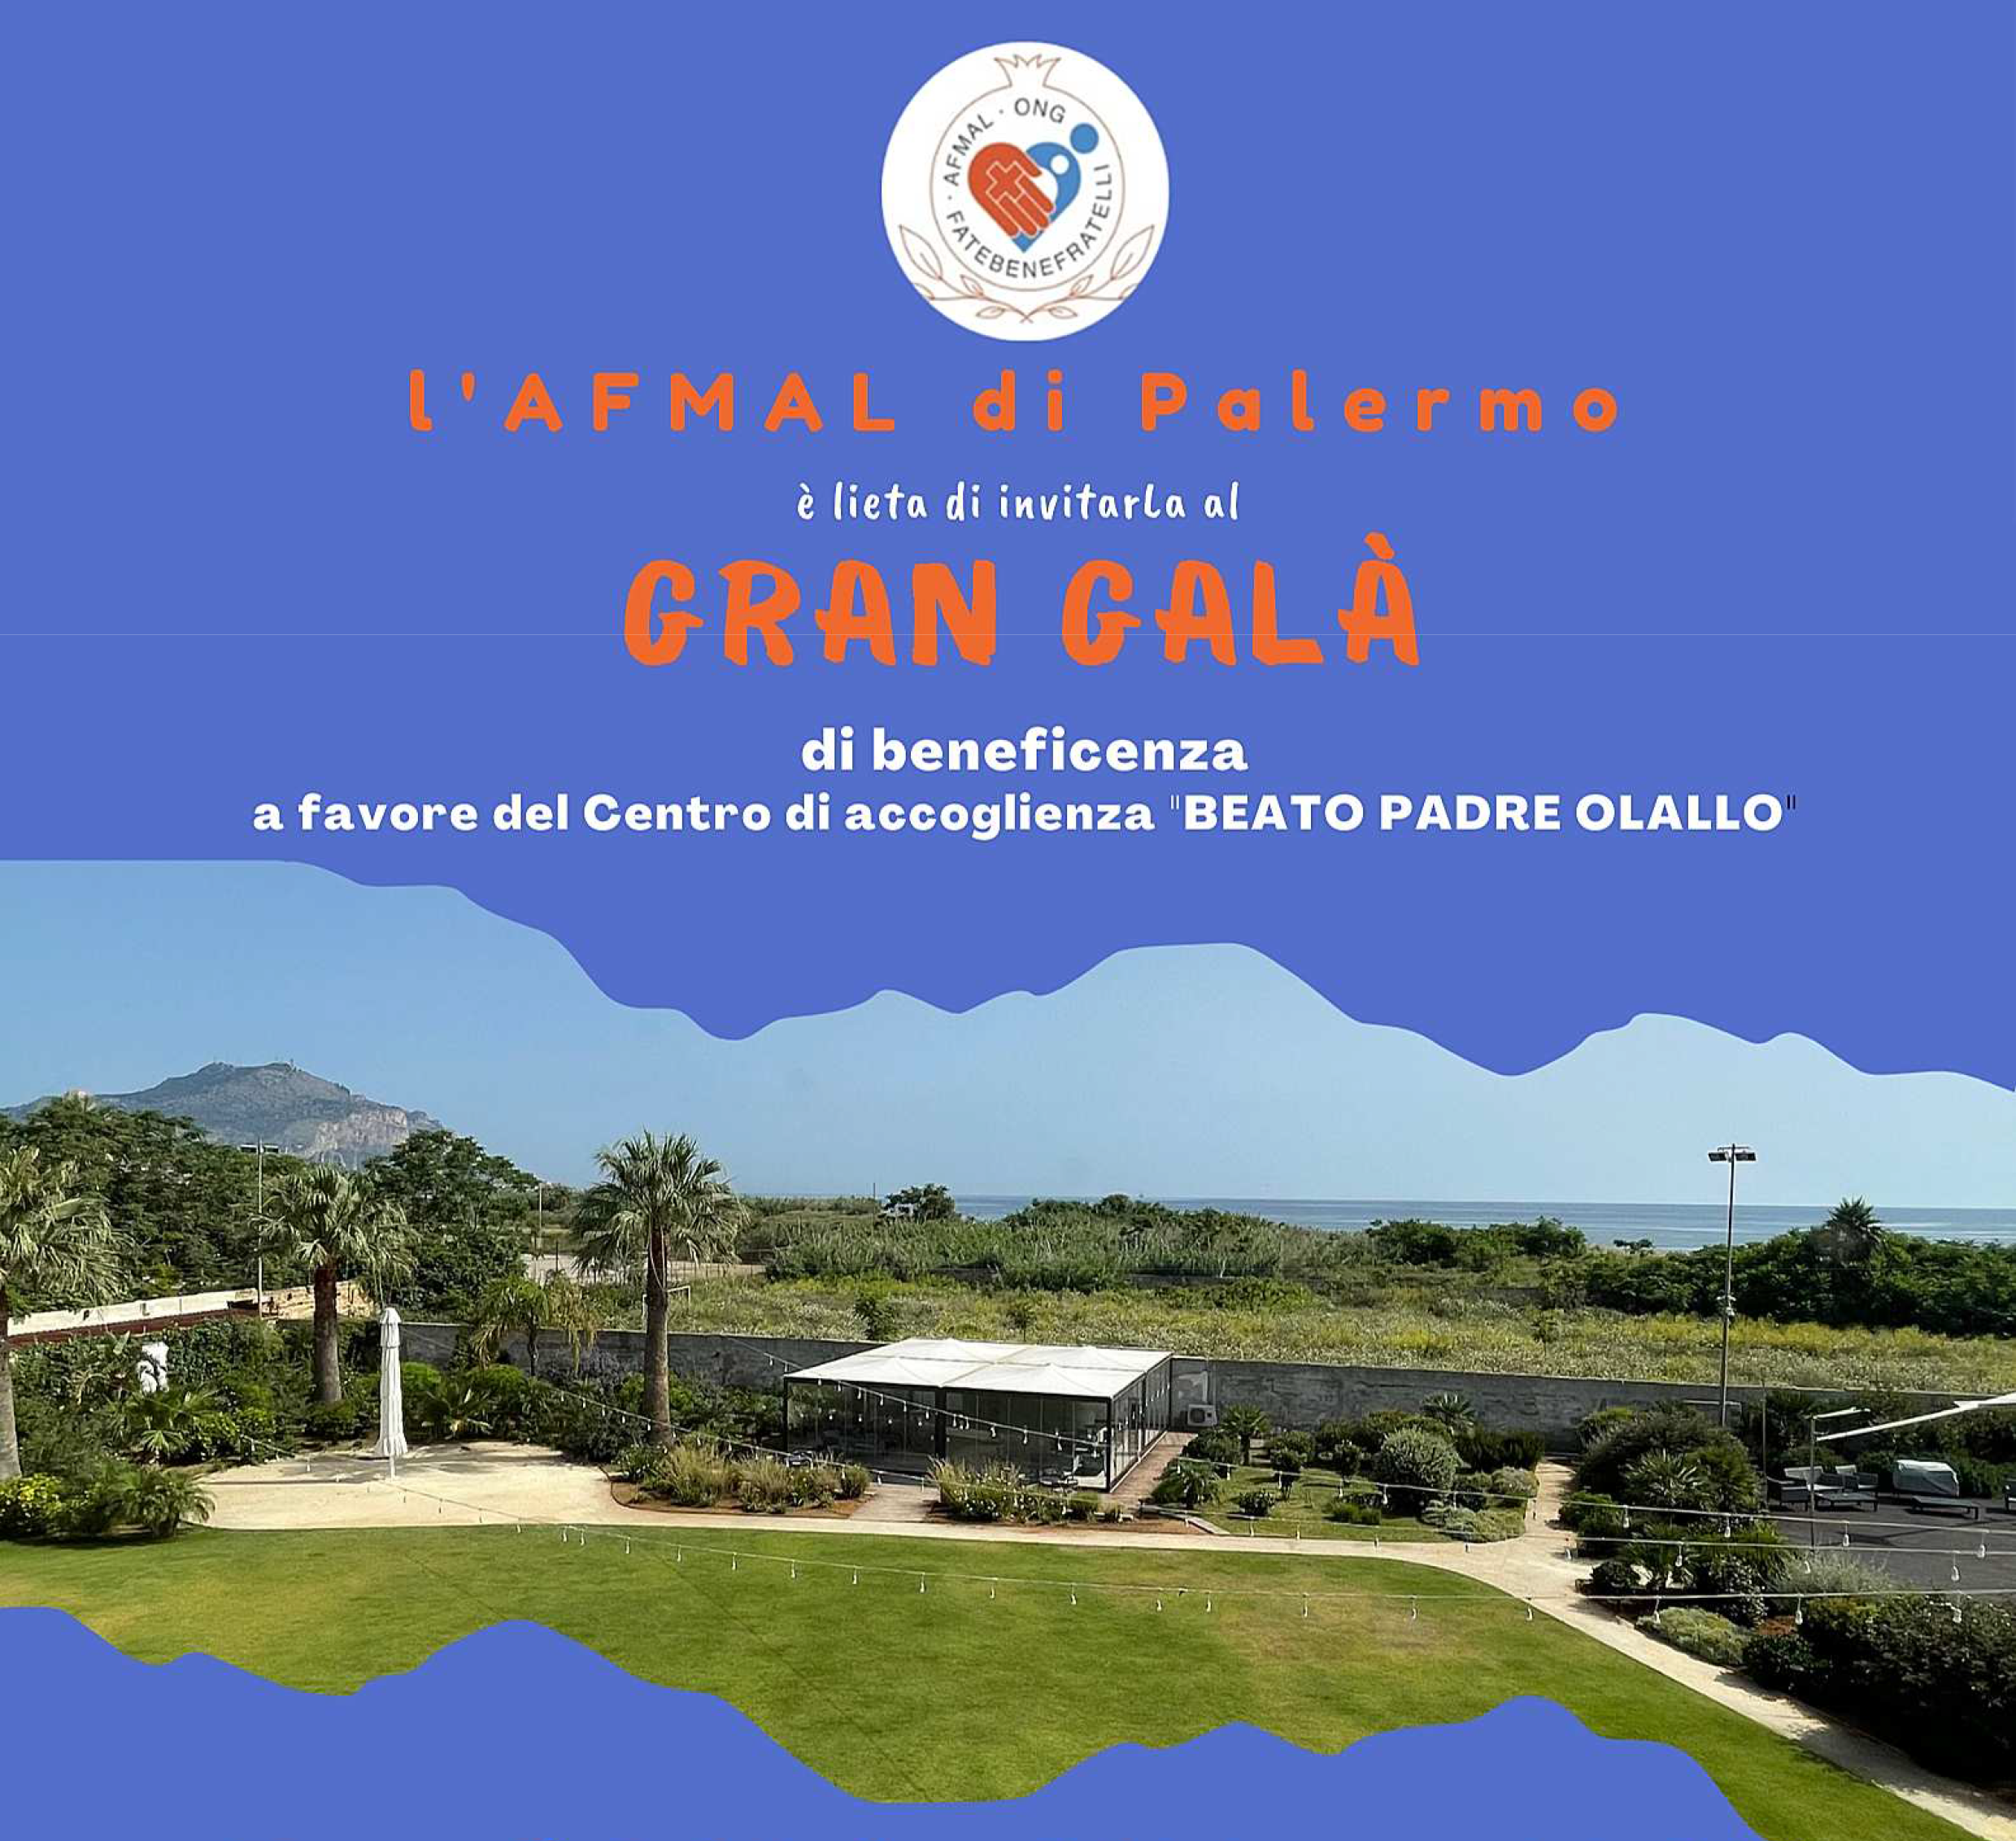 AFMAL di Palermo: Gran Gala di beneficienza